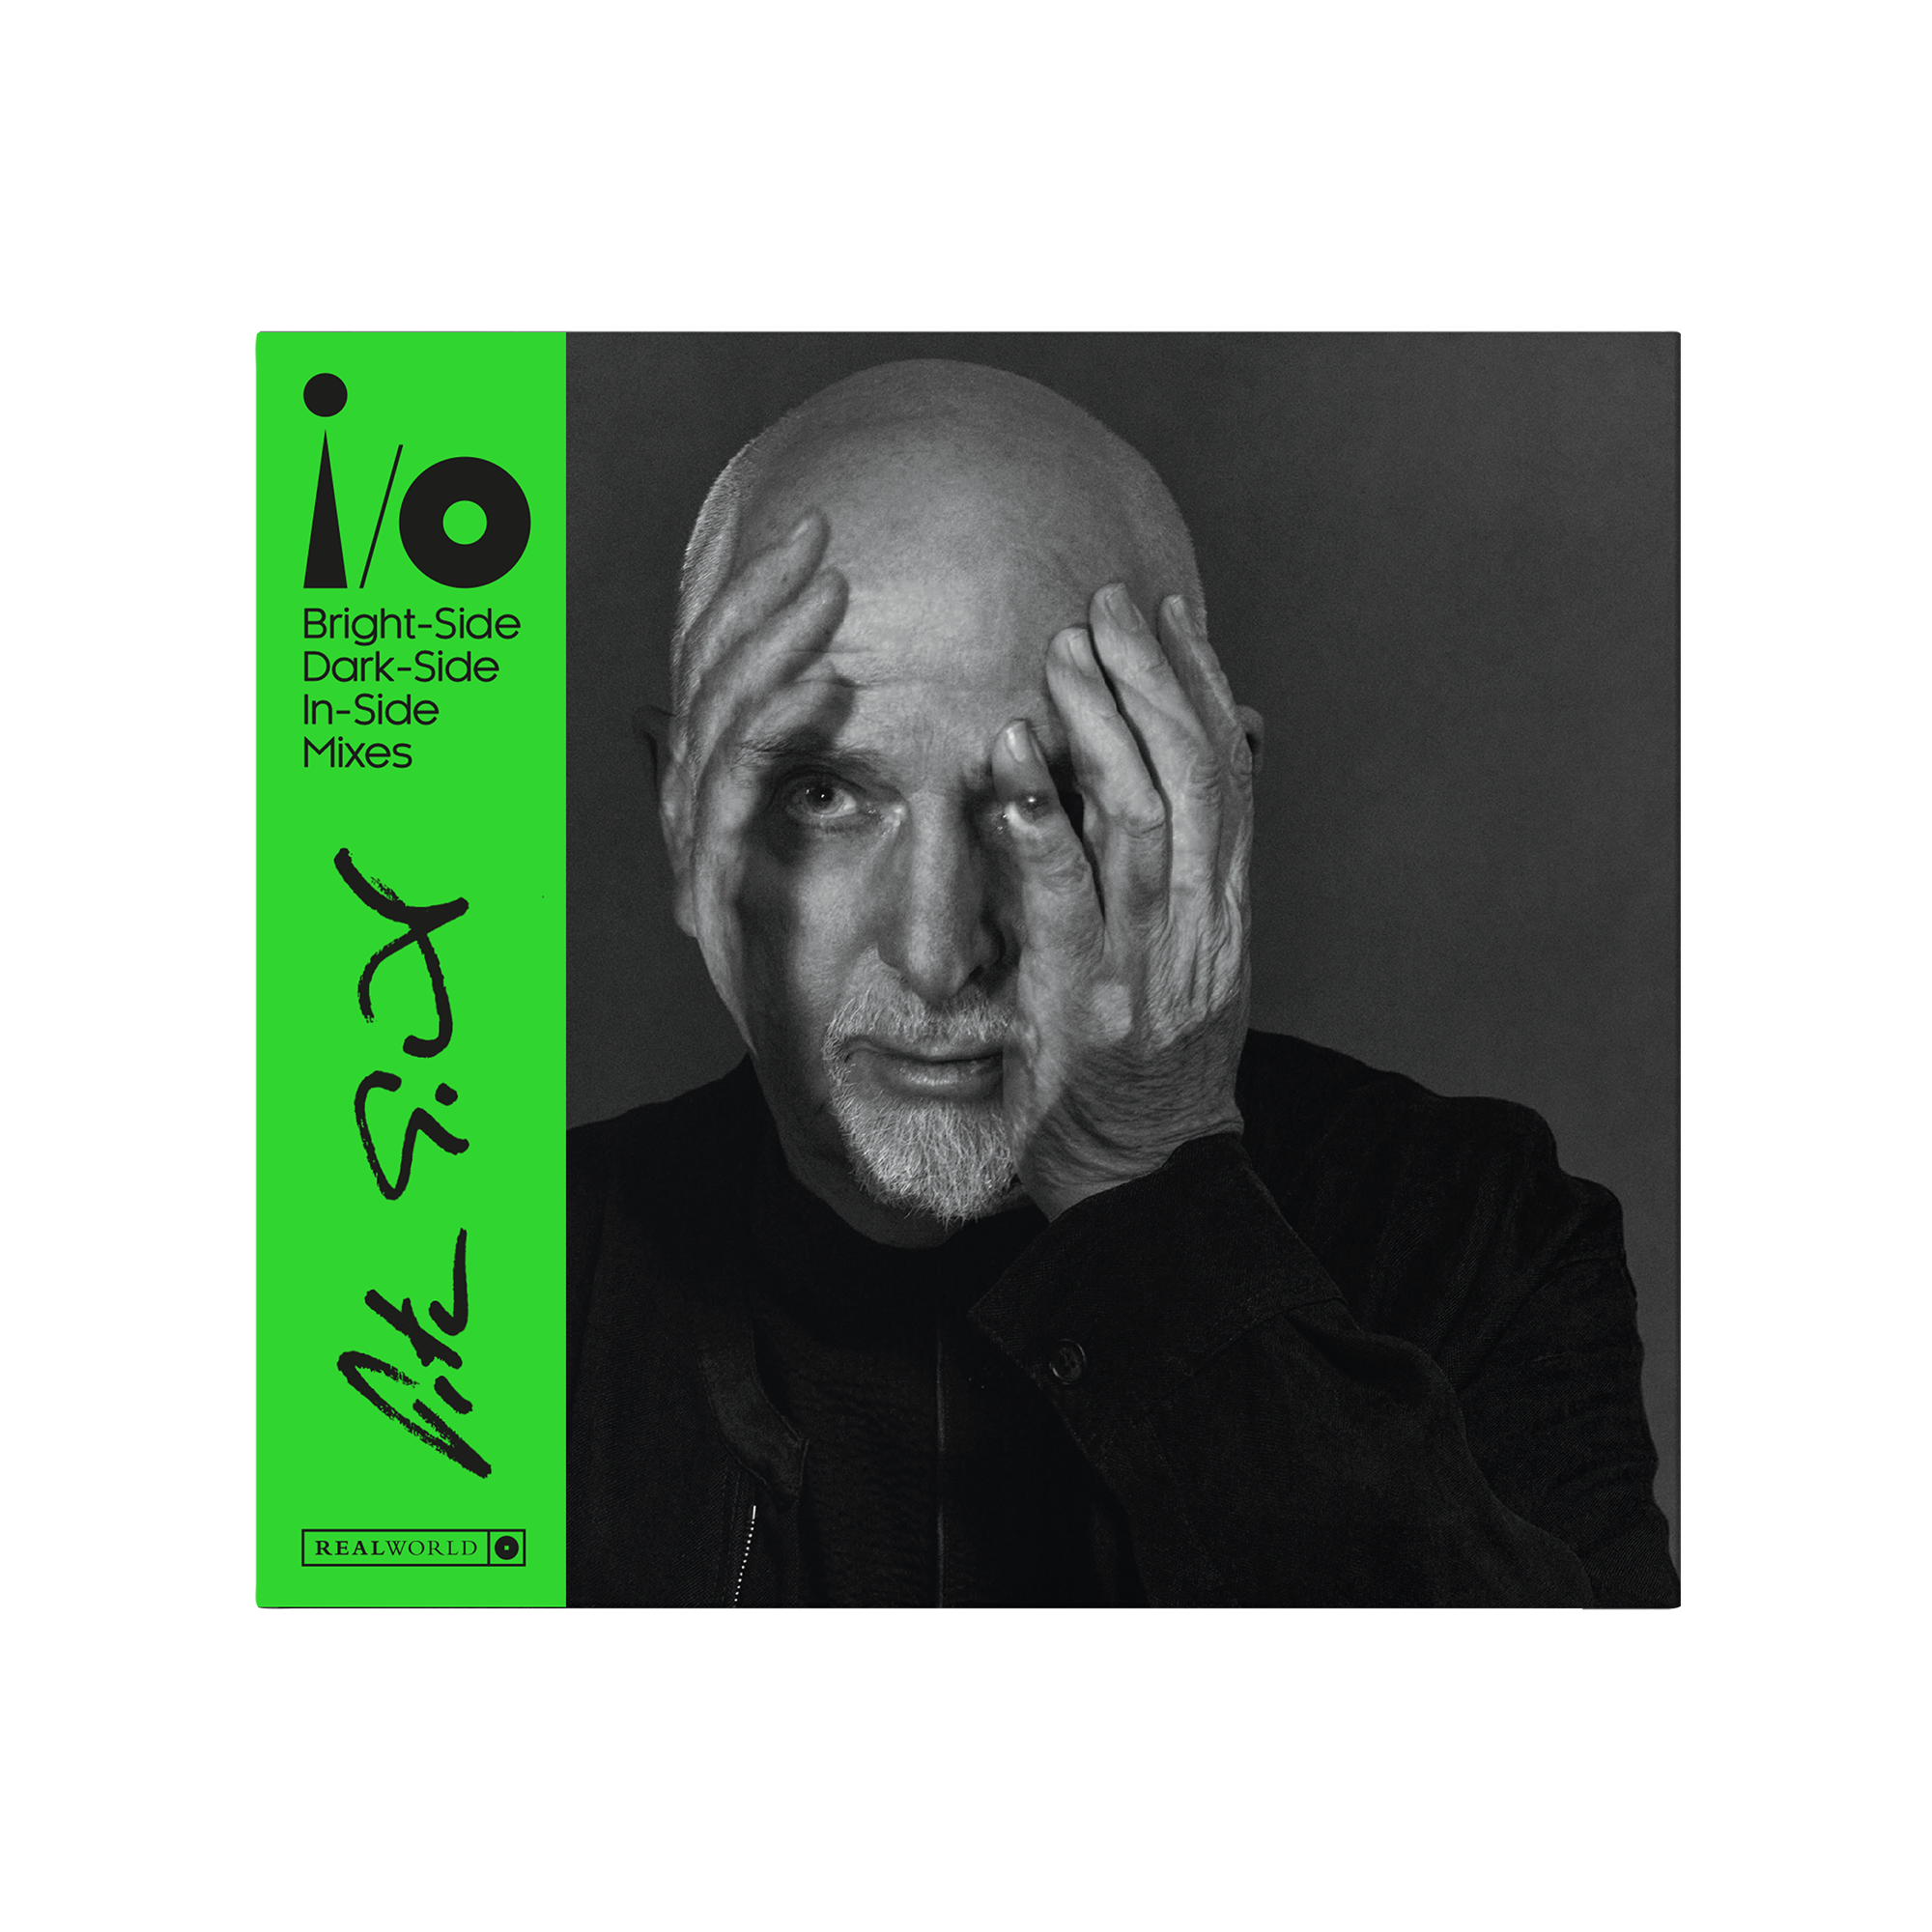 Peter Gabriel - i/o: 2CD + Blu-Ray